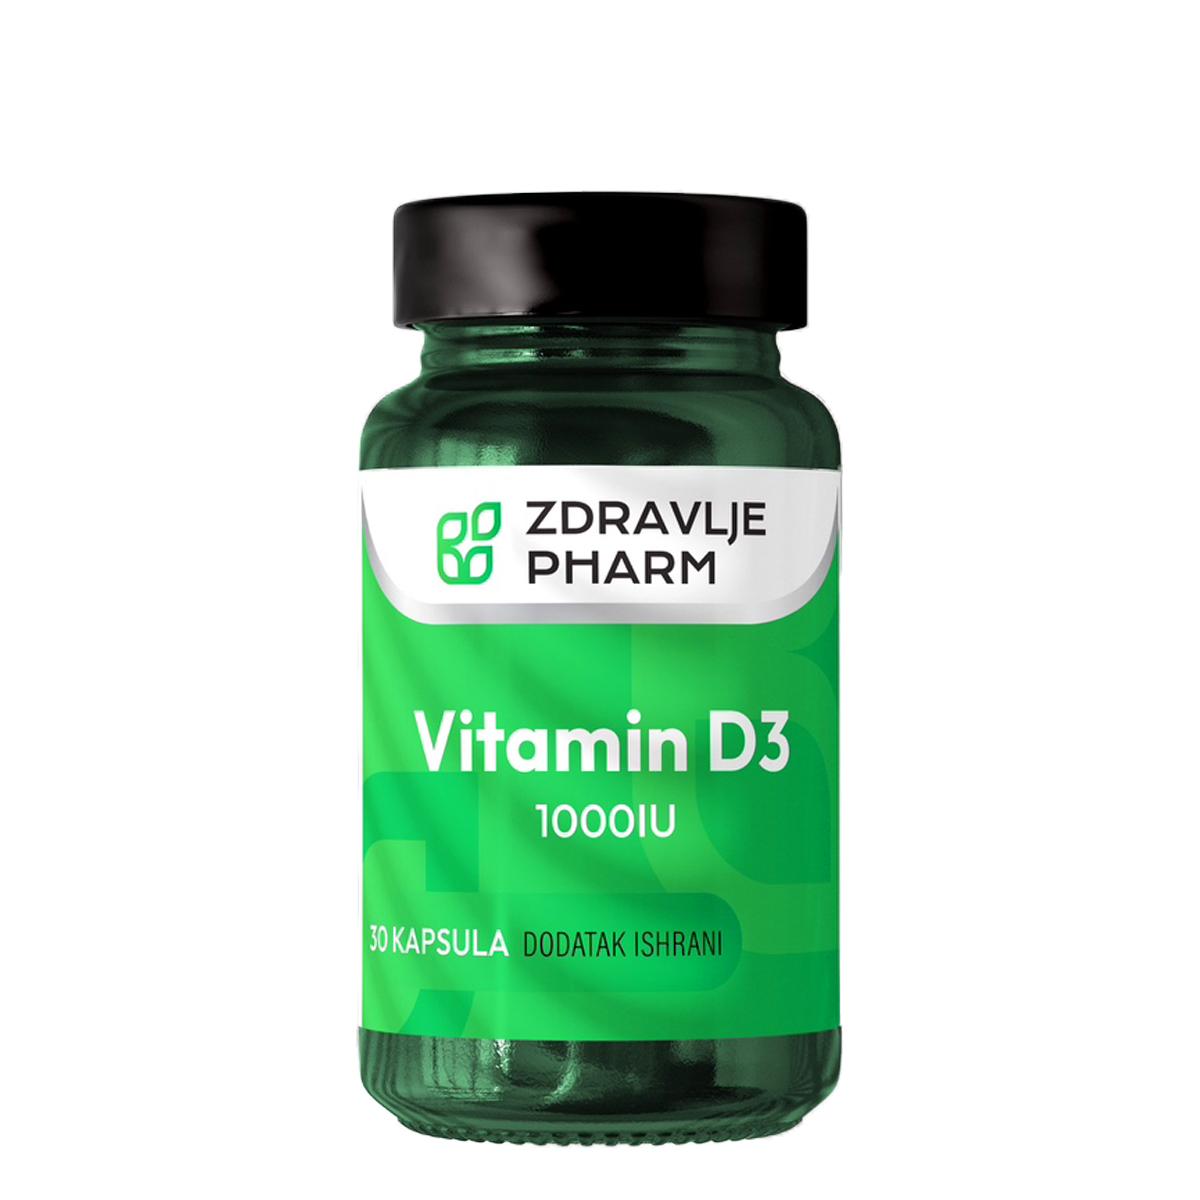 ZDRAVLJE PHARM Vitamin D3 1000IU 30 kapsula